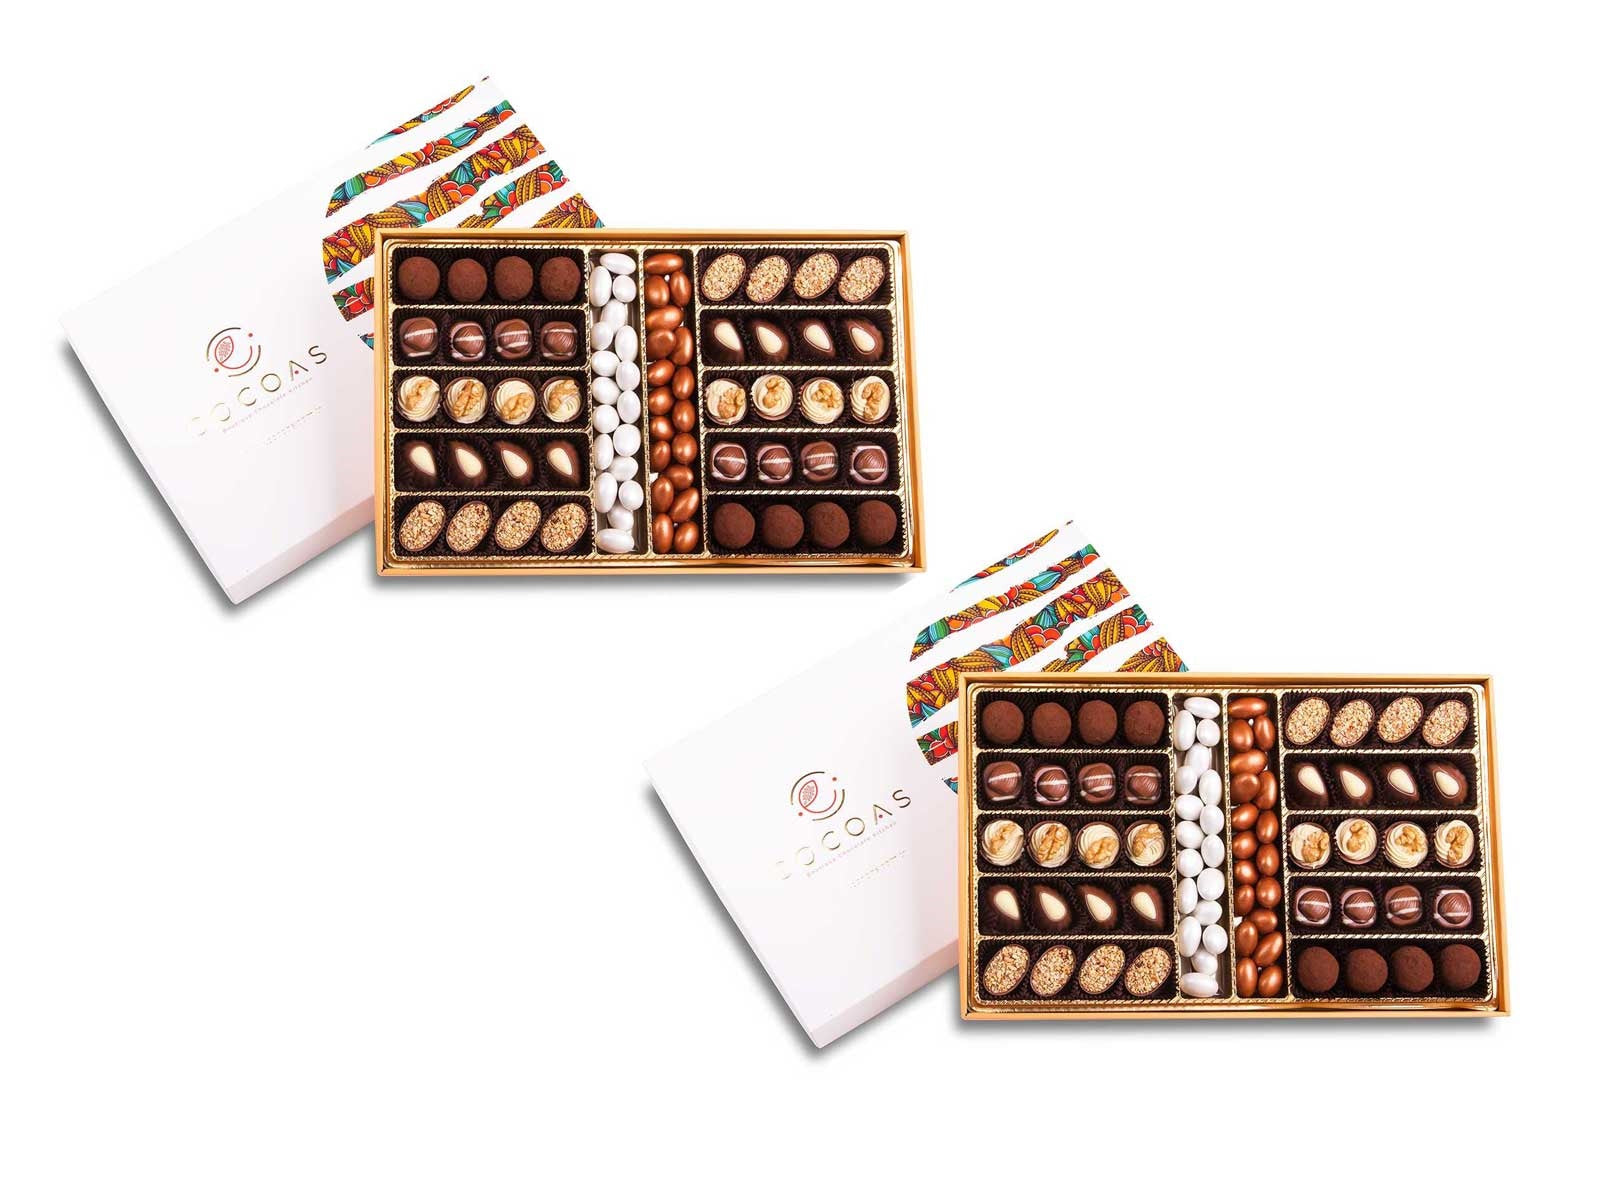 Bronz Badem Spesiyal Çikolata 1000 Gr kutu x 2 Adet Set (brüt 1.702 gr/net 1.224 Gr)